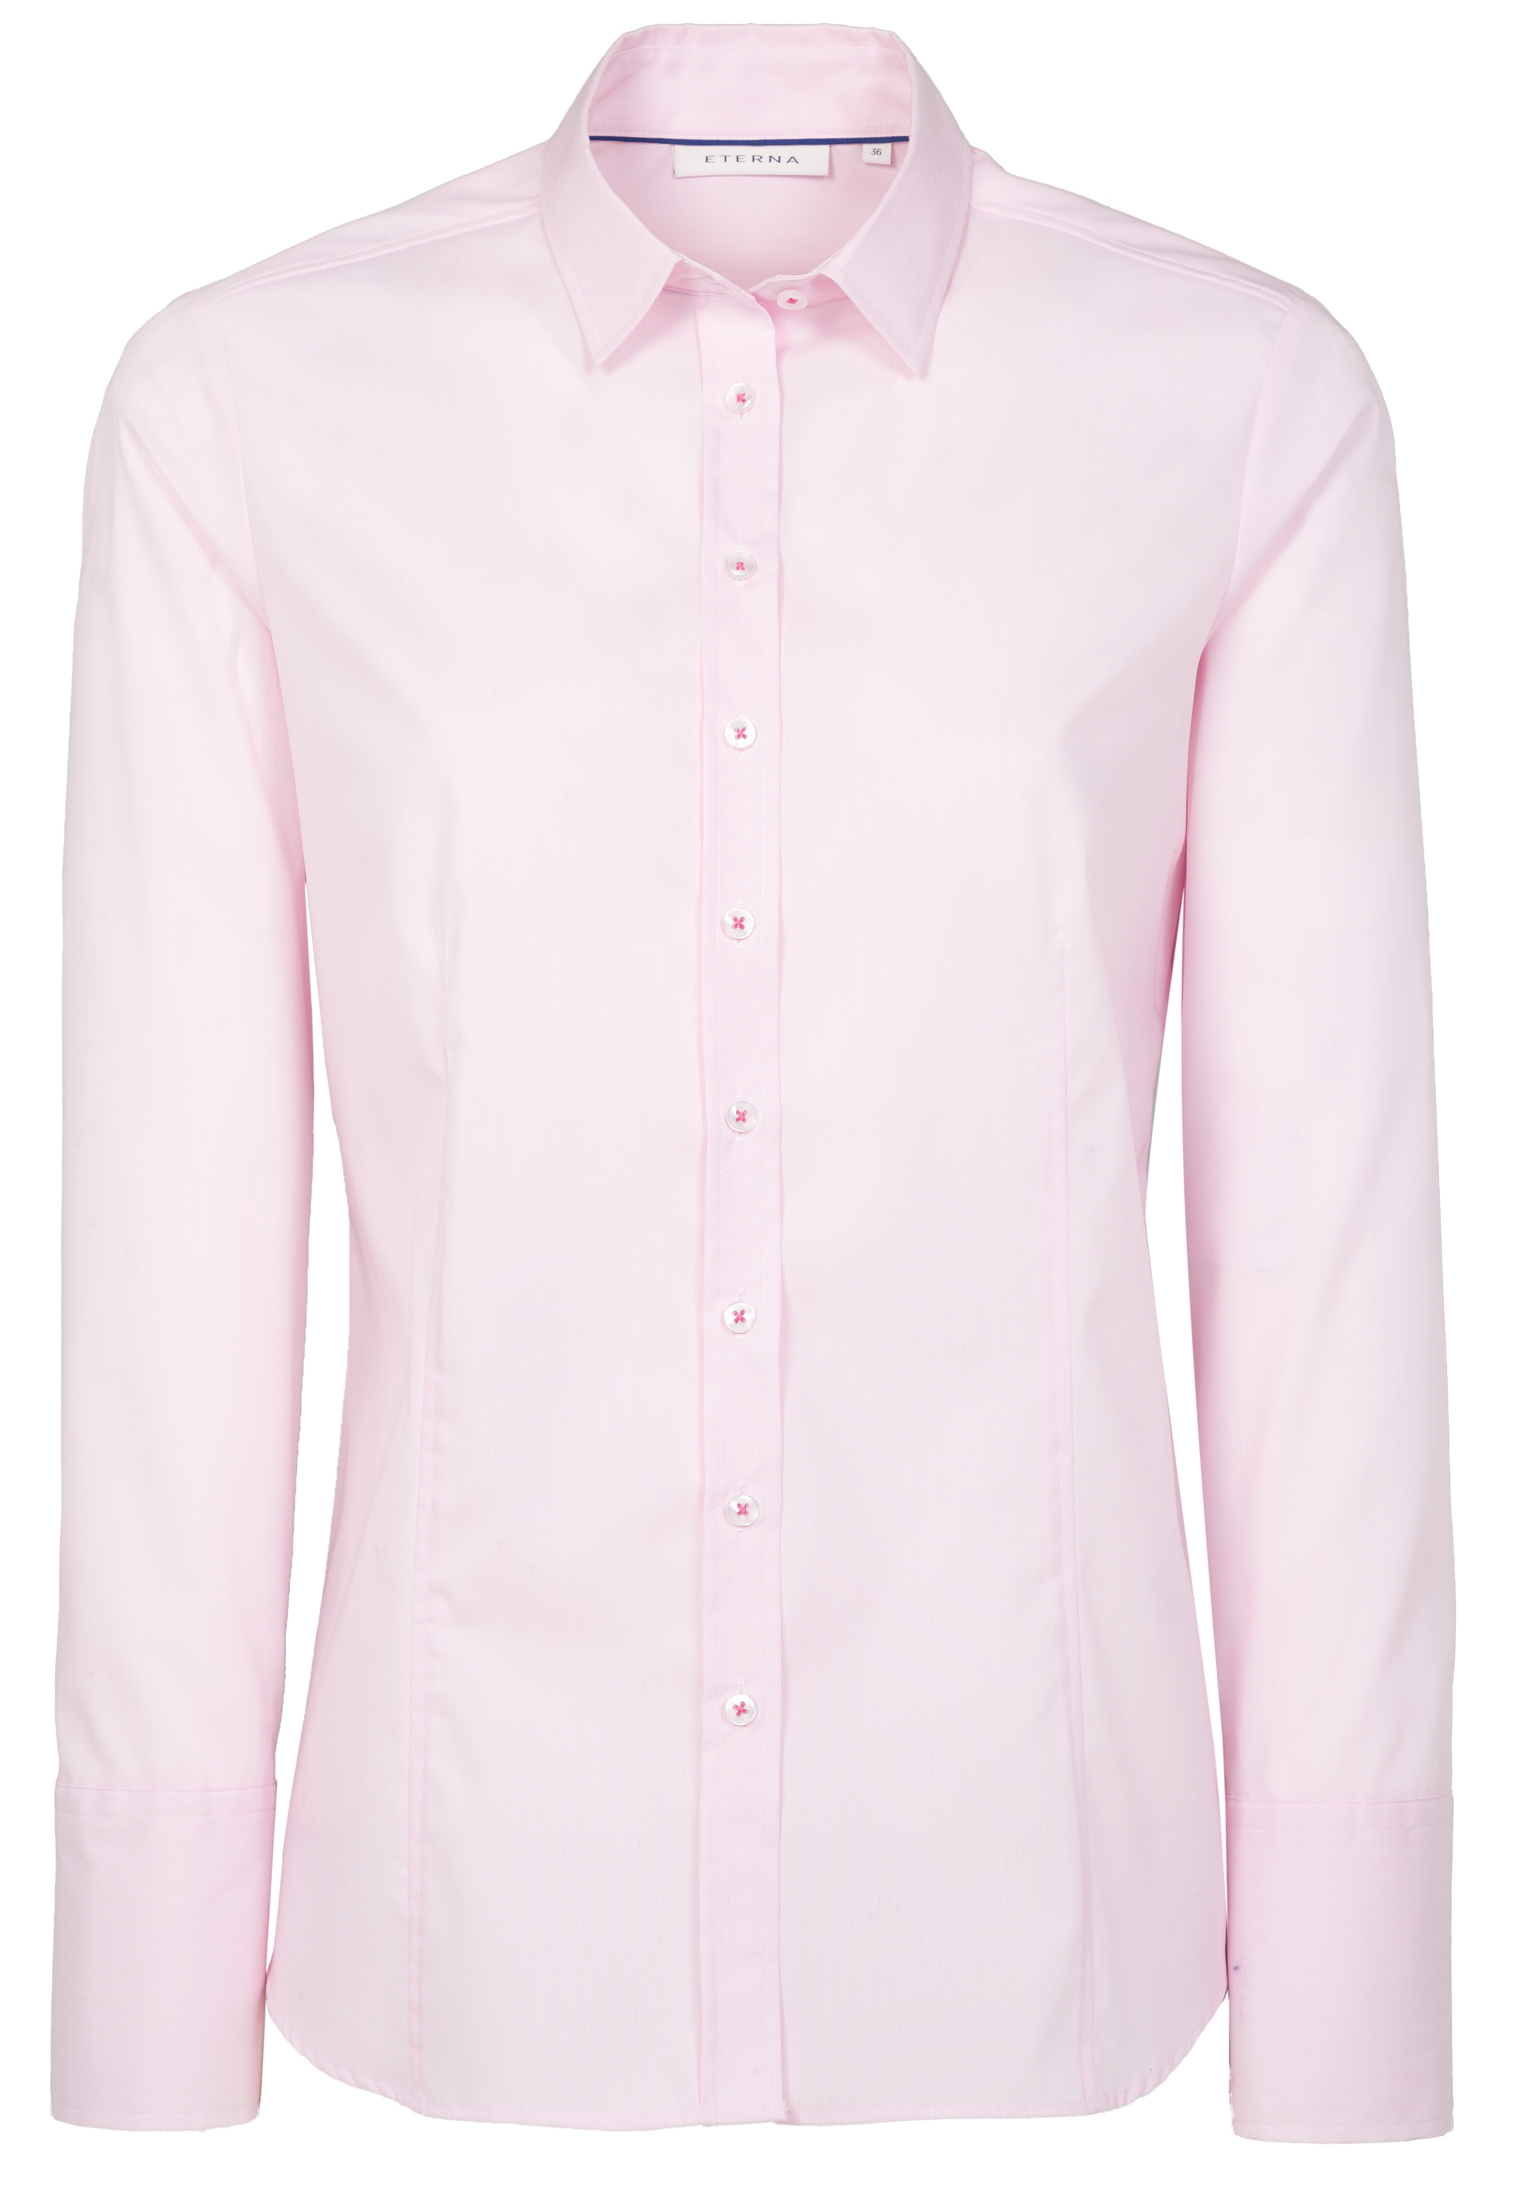 ETERNA MODERN CLASSIC Langarm Bluse rosa-weiß gestreift 6151 D624.51 |  Modern Fit | Eterna | Blusen | Damen Bekleidung | Jeans-Manufaktur